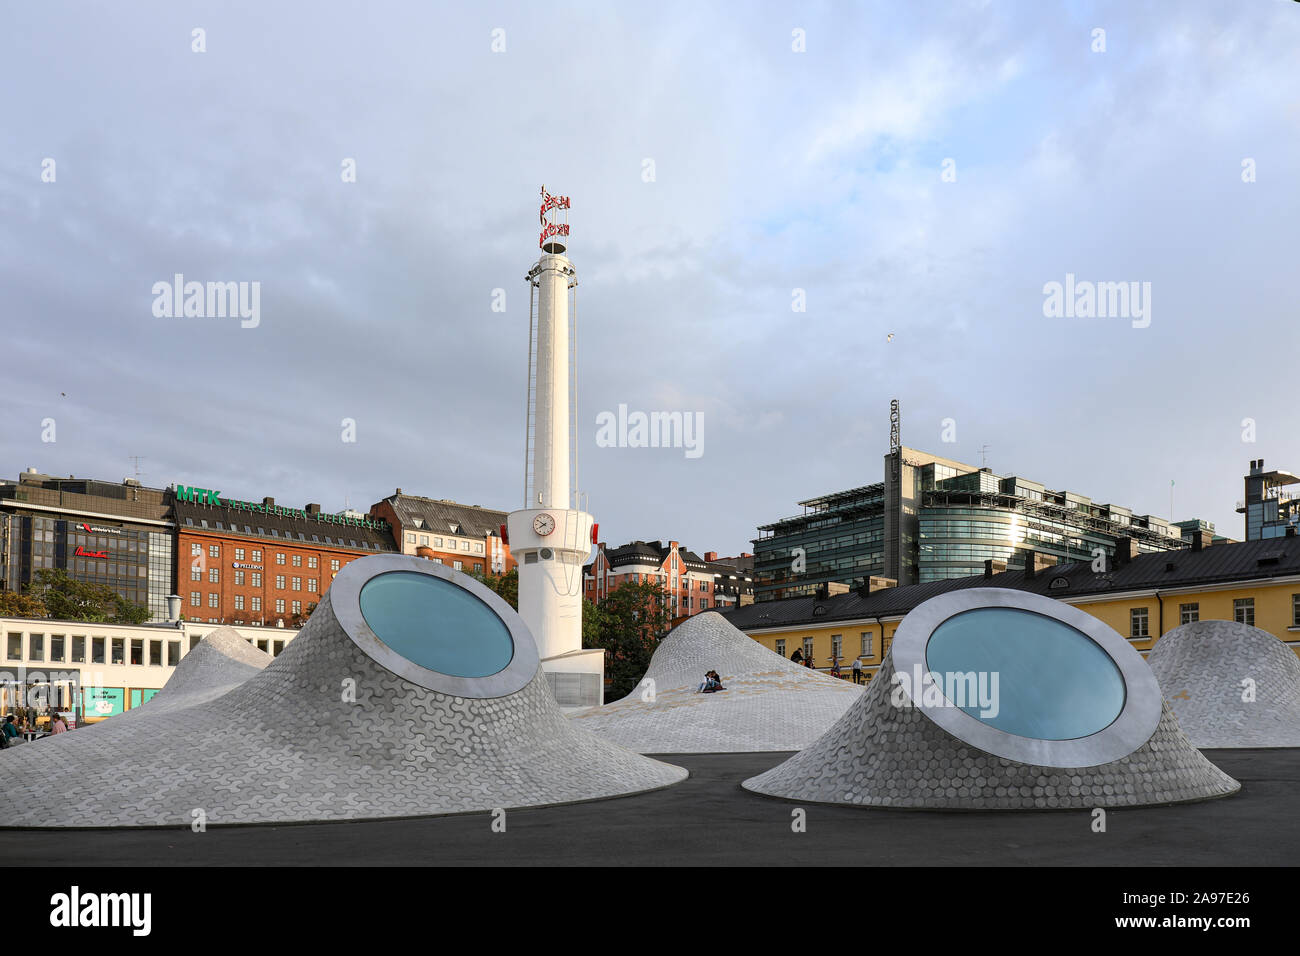 Amos Rex subterranean art museum skylights at Lasipalatsi Square in Helsinki, Finland Stock Photo